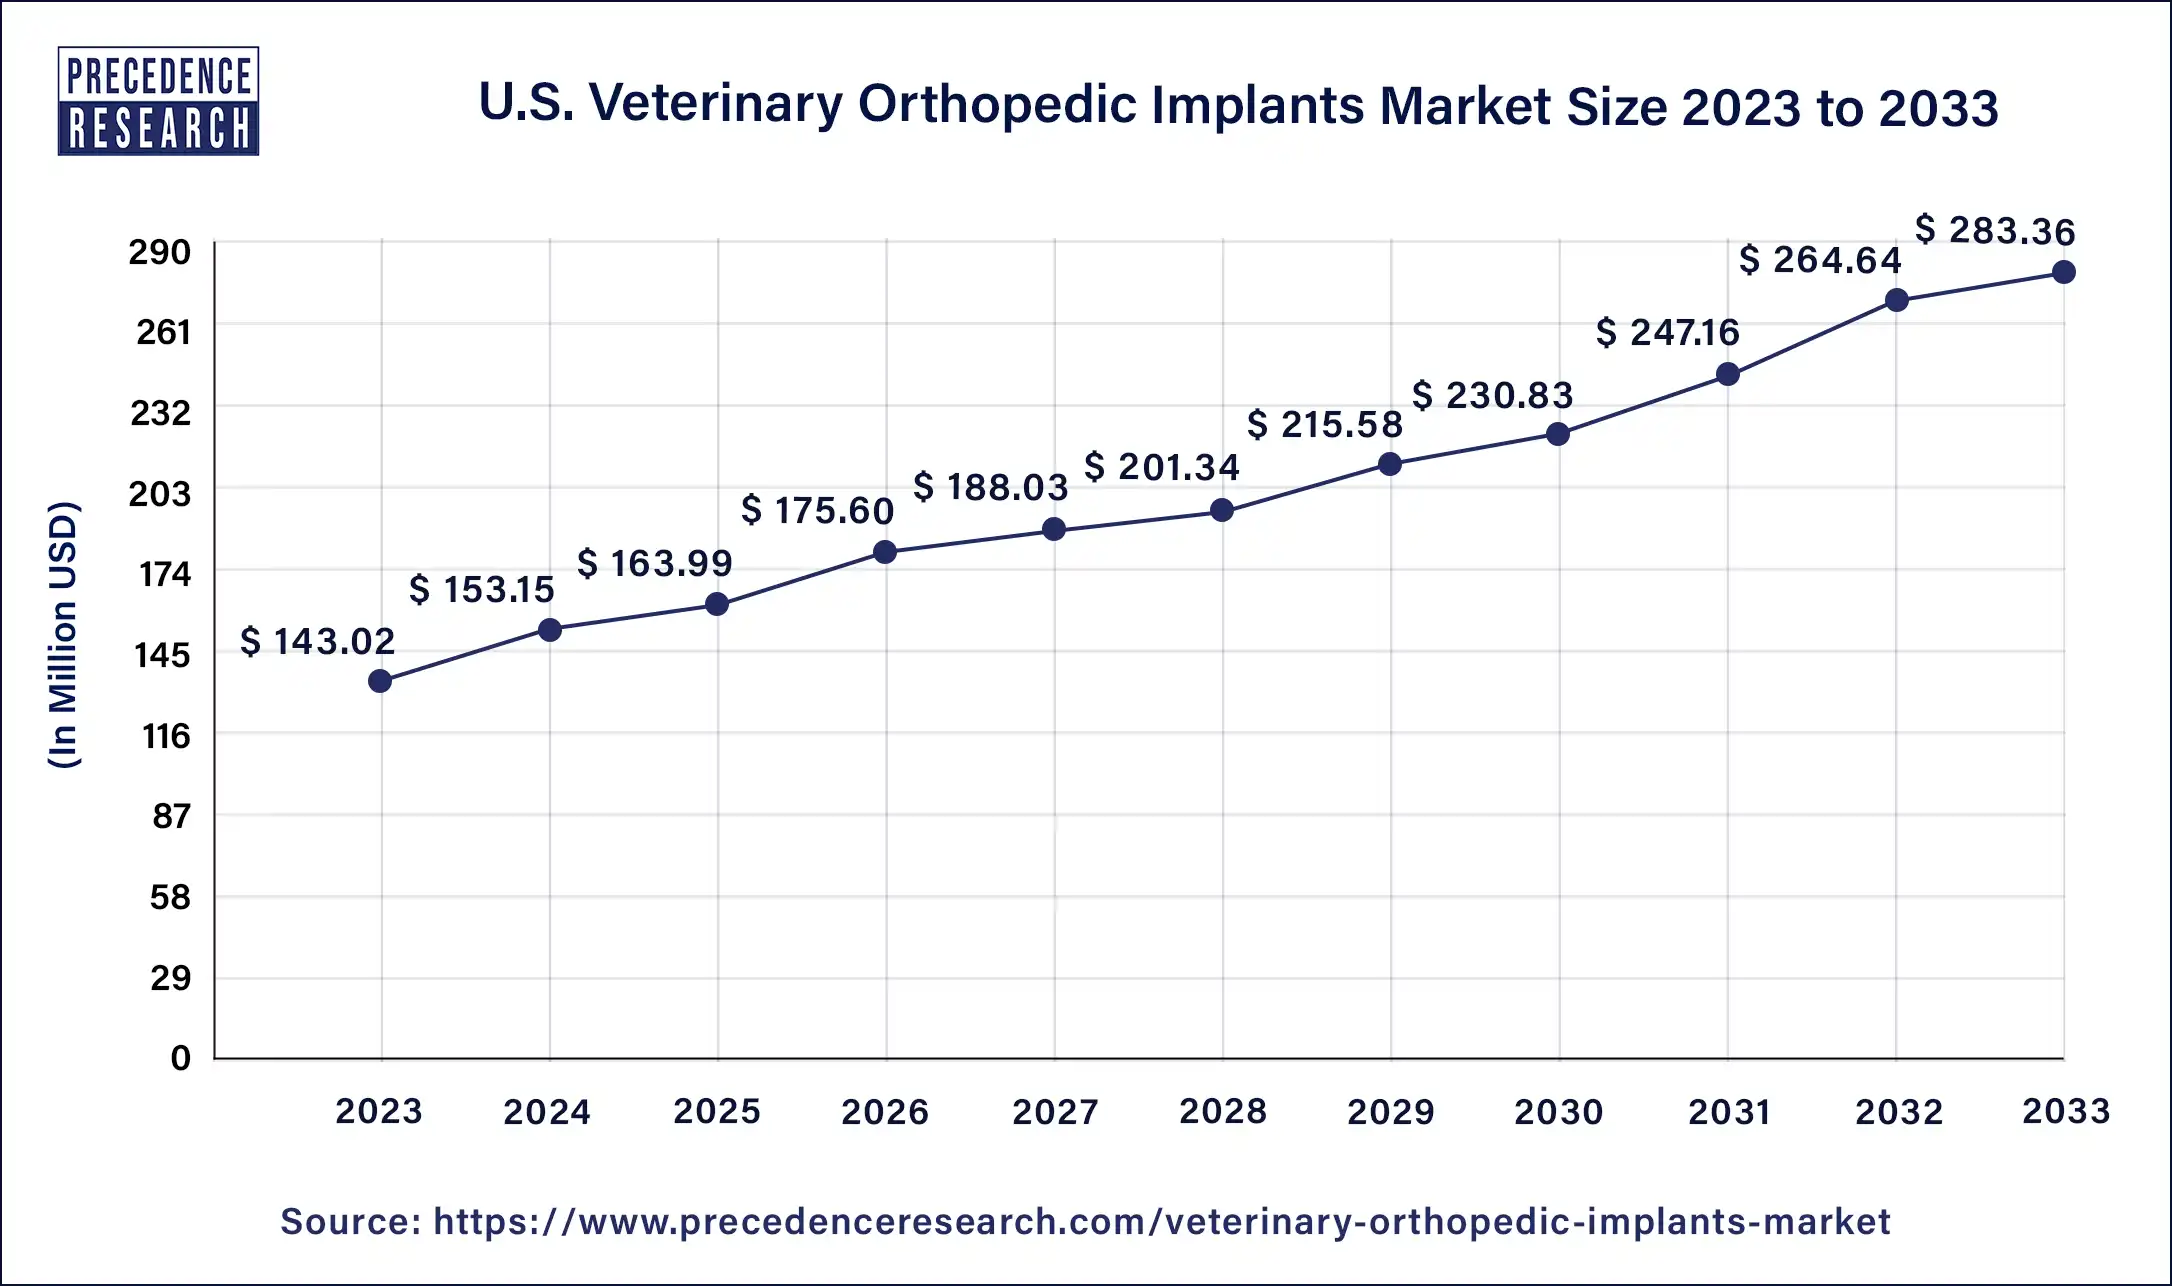 U.S. Veterinary Orthopedic Implants Market Size 2024 to 2033